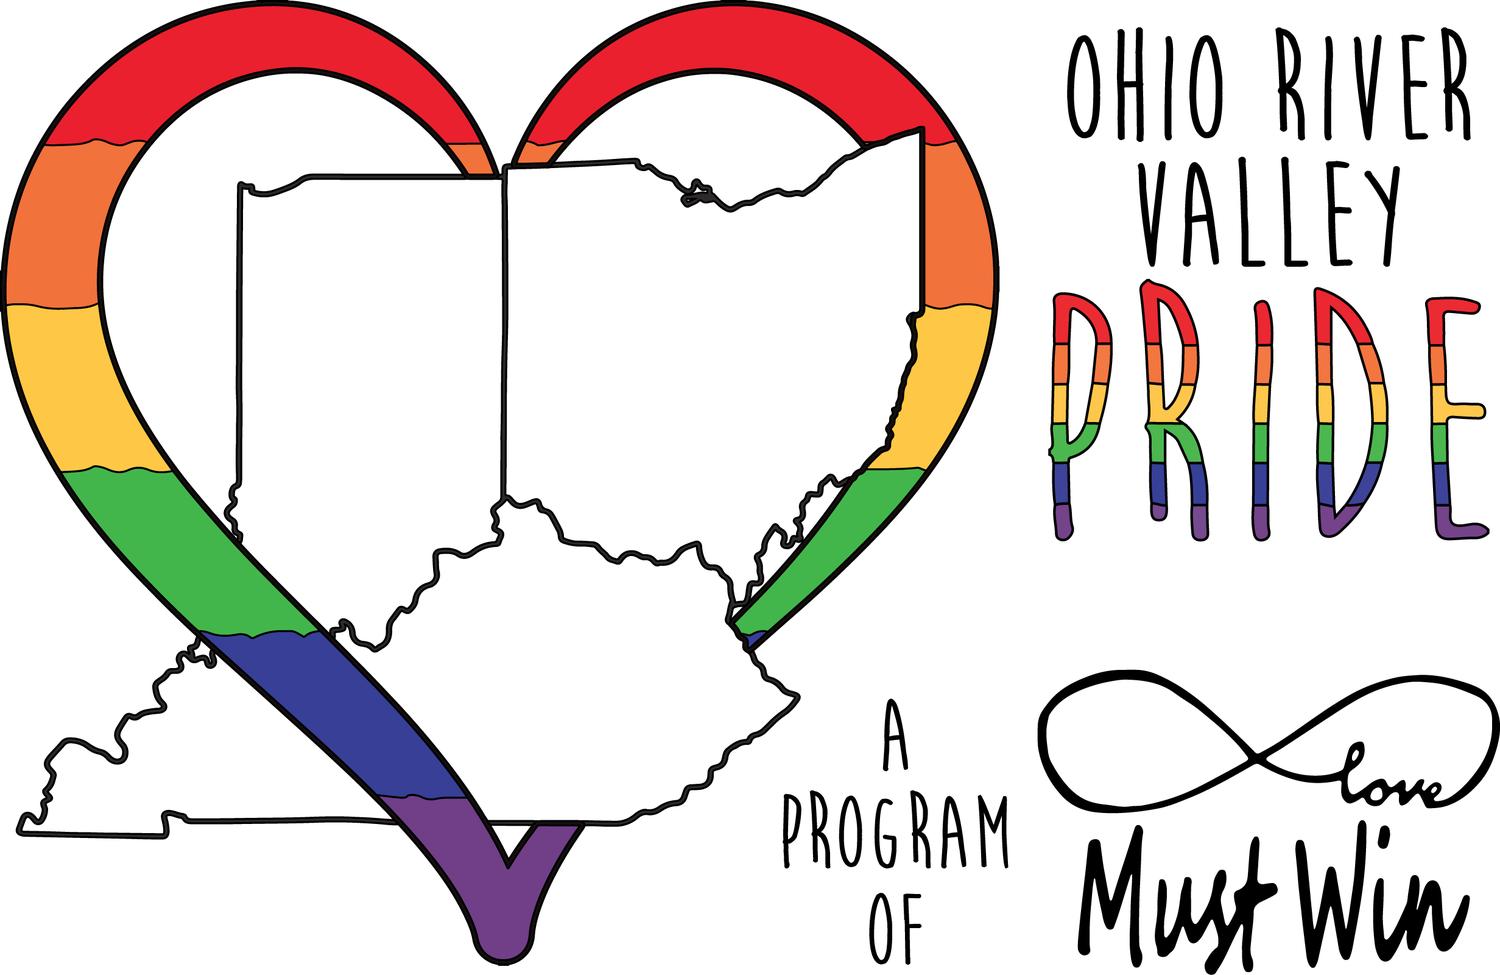 Ohio River Valley Pride